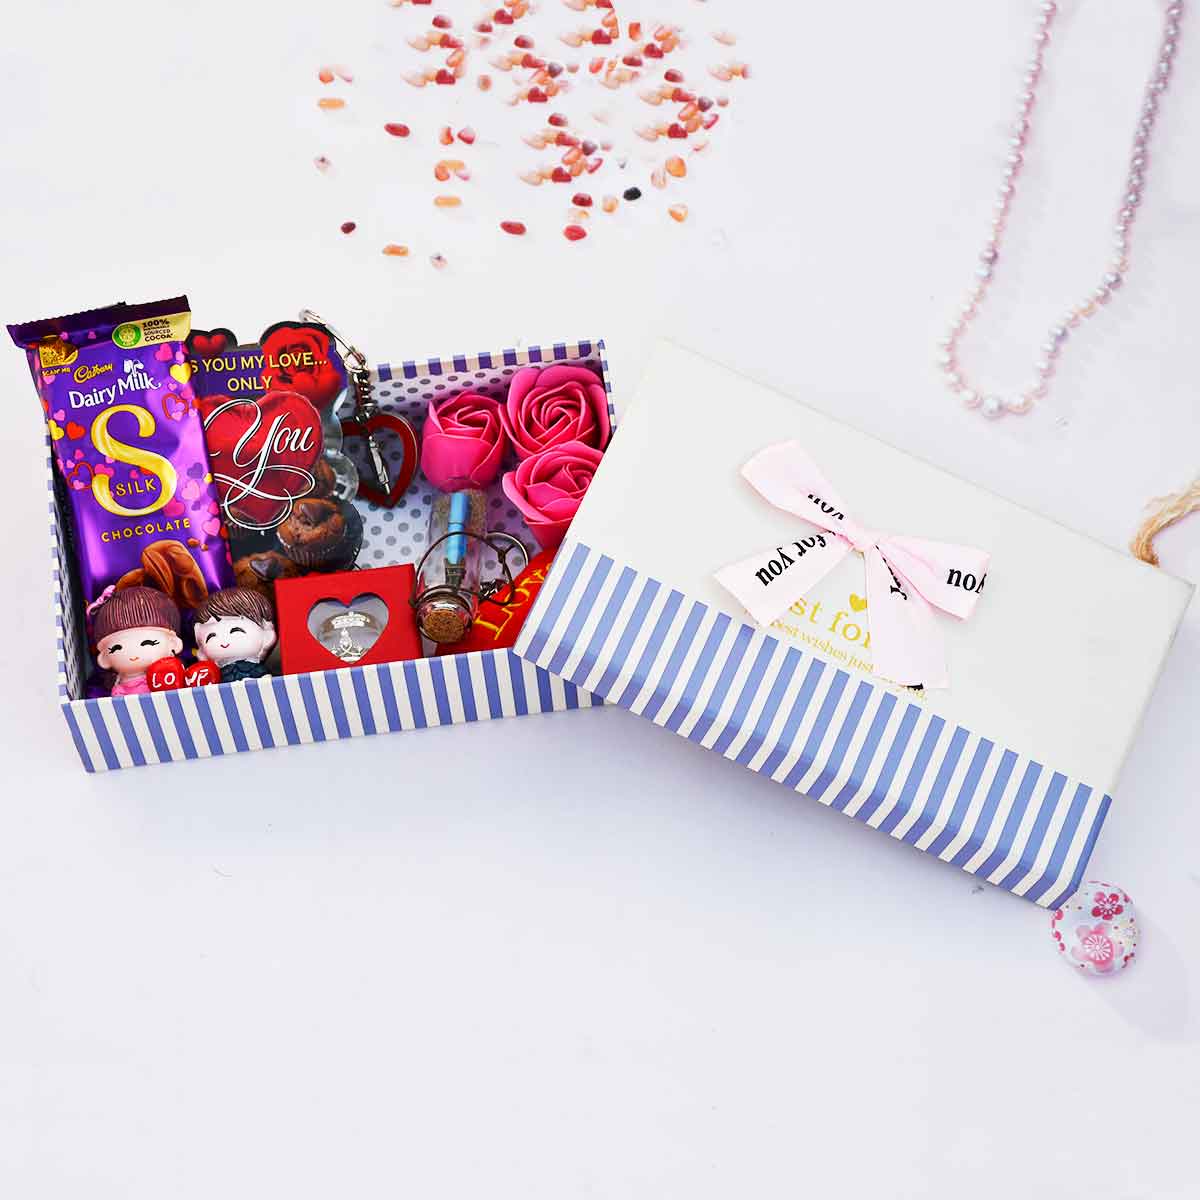 Gifts For Boyfriend Online Romantic and Unique Gifts For Boyfriend  Winni